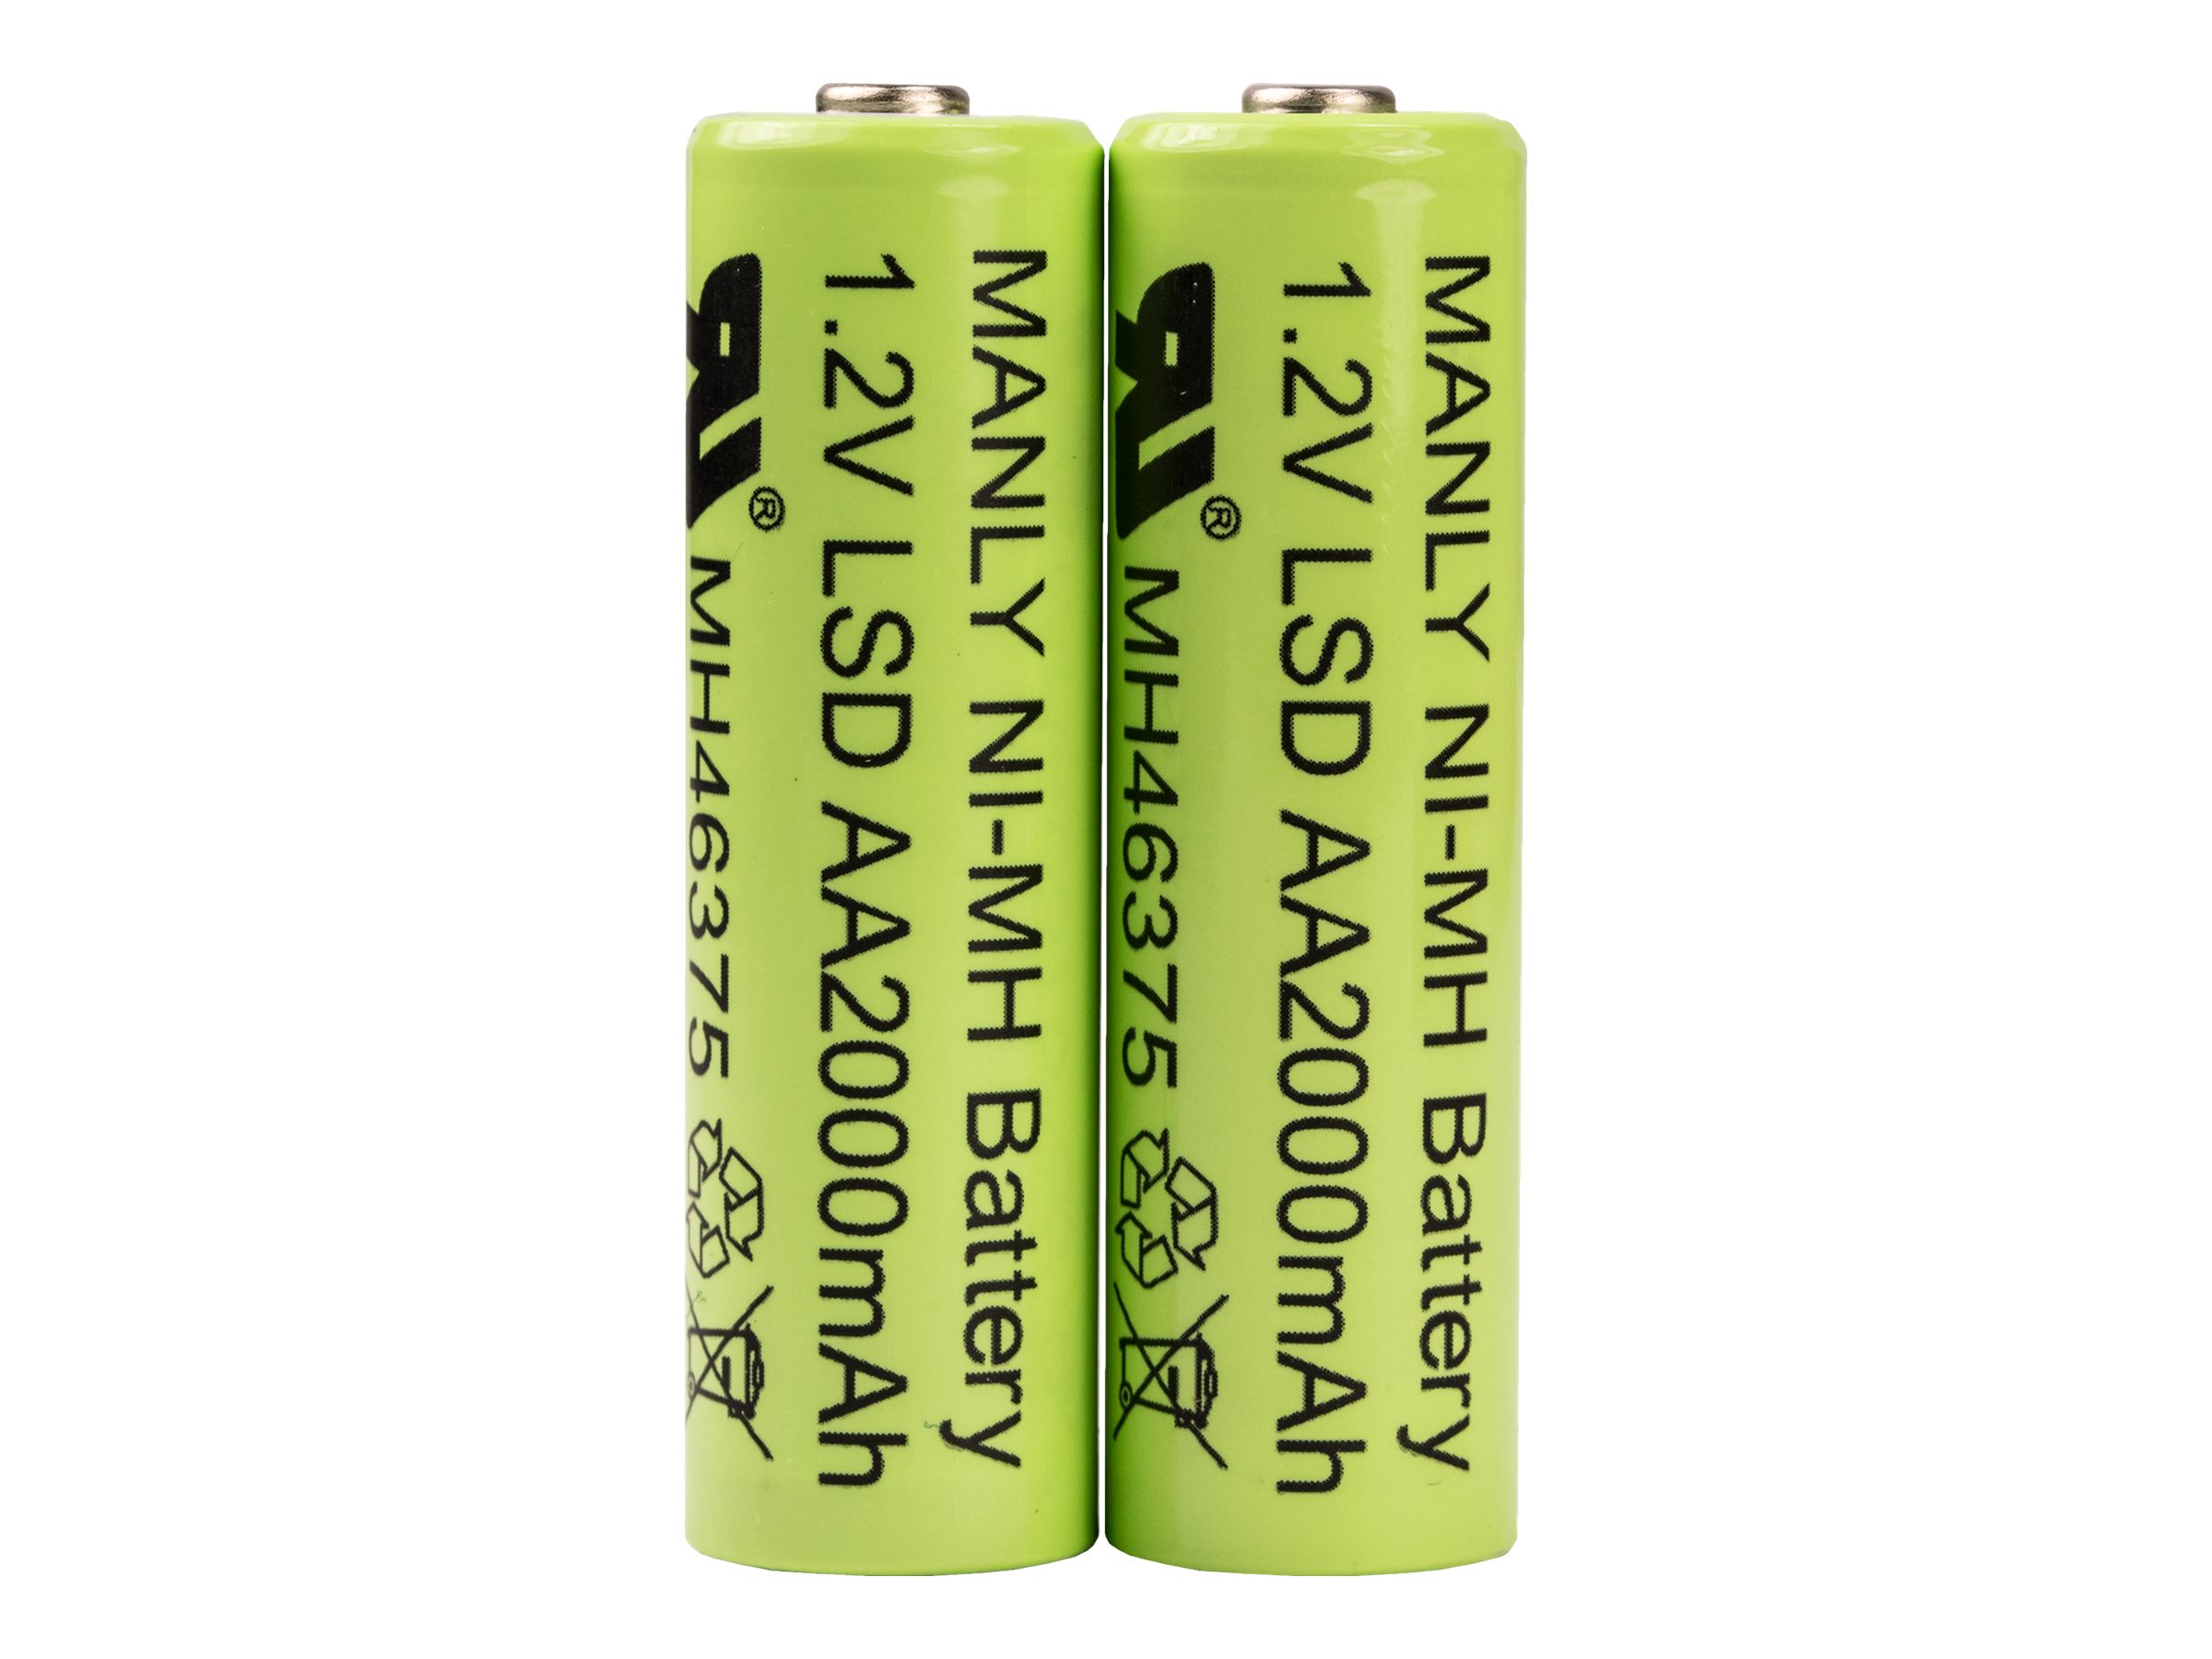 Socket - Batterie 2 x AA-Typ - NiMH - (wiederaufladbar) - 2000 mAh - für SocketScan S700, S730, S740